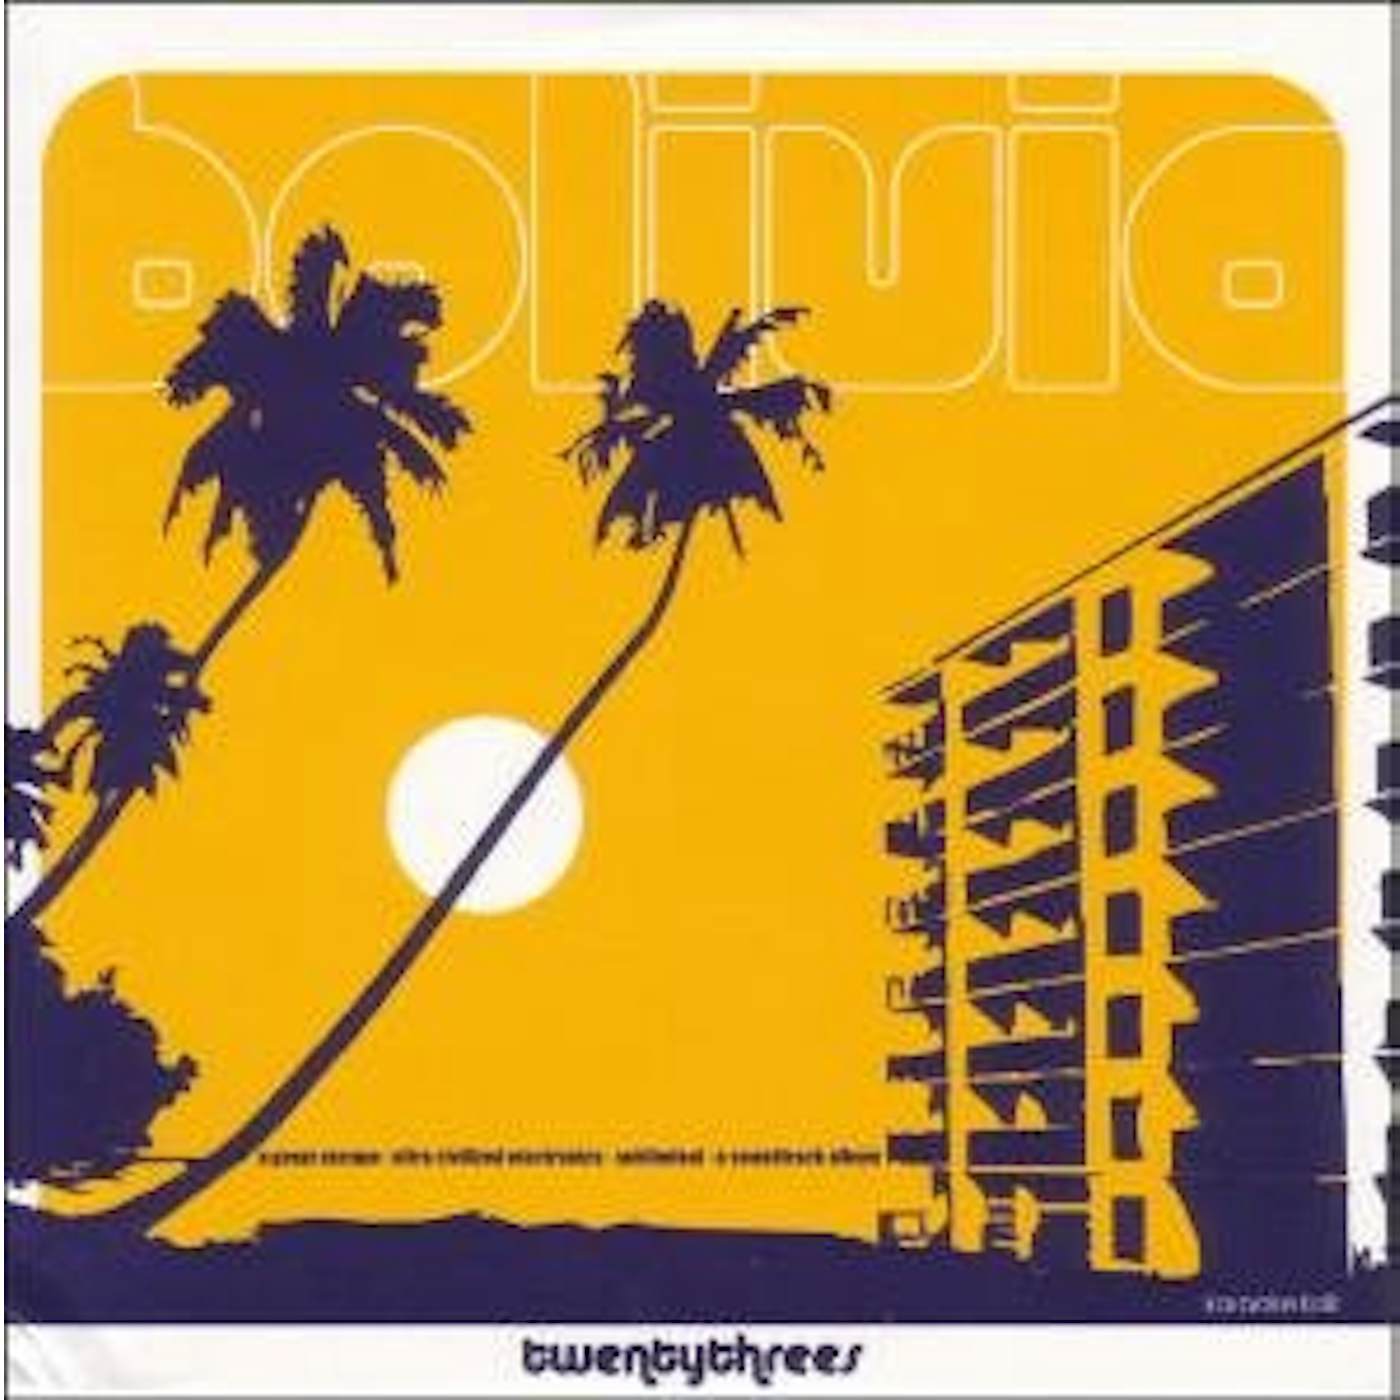 The 23s BOLIVIA CD